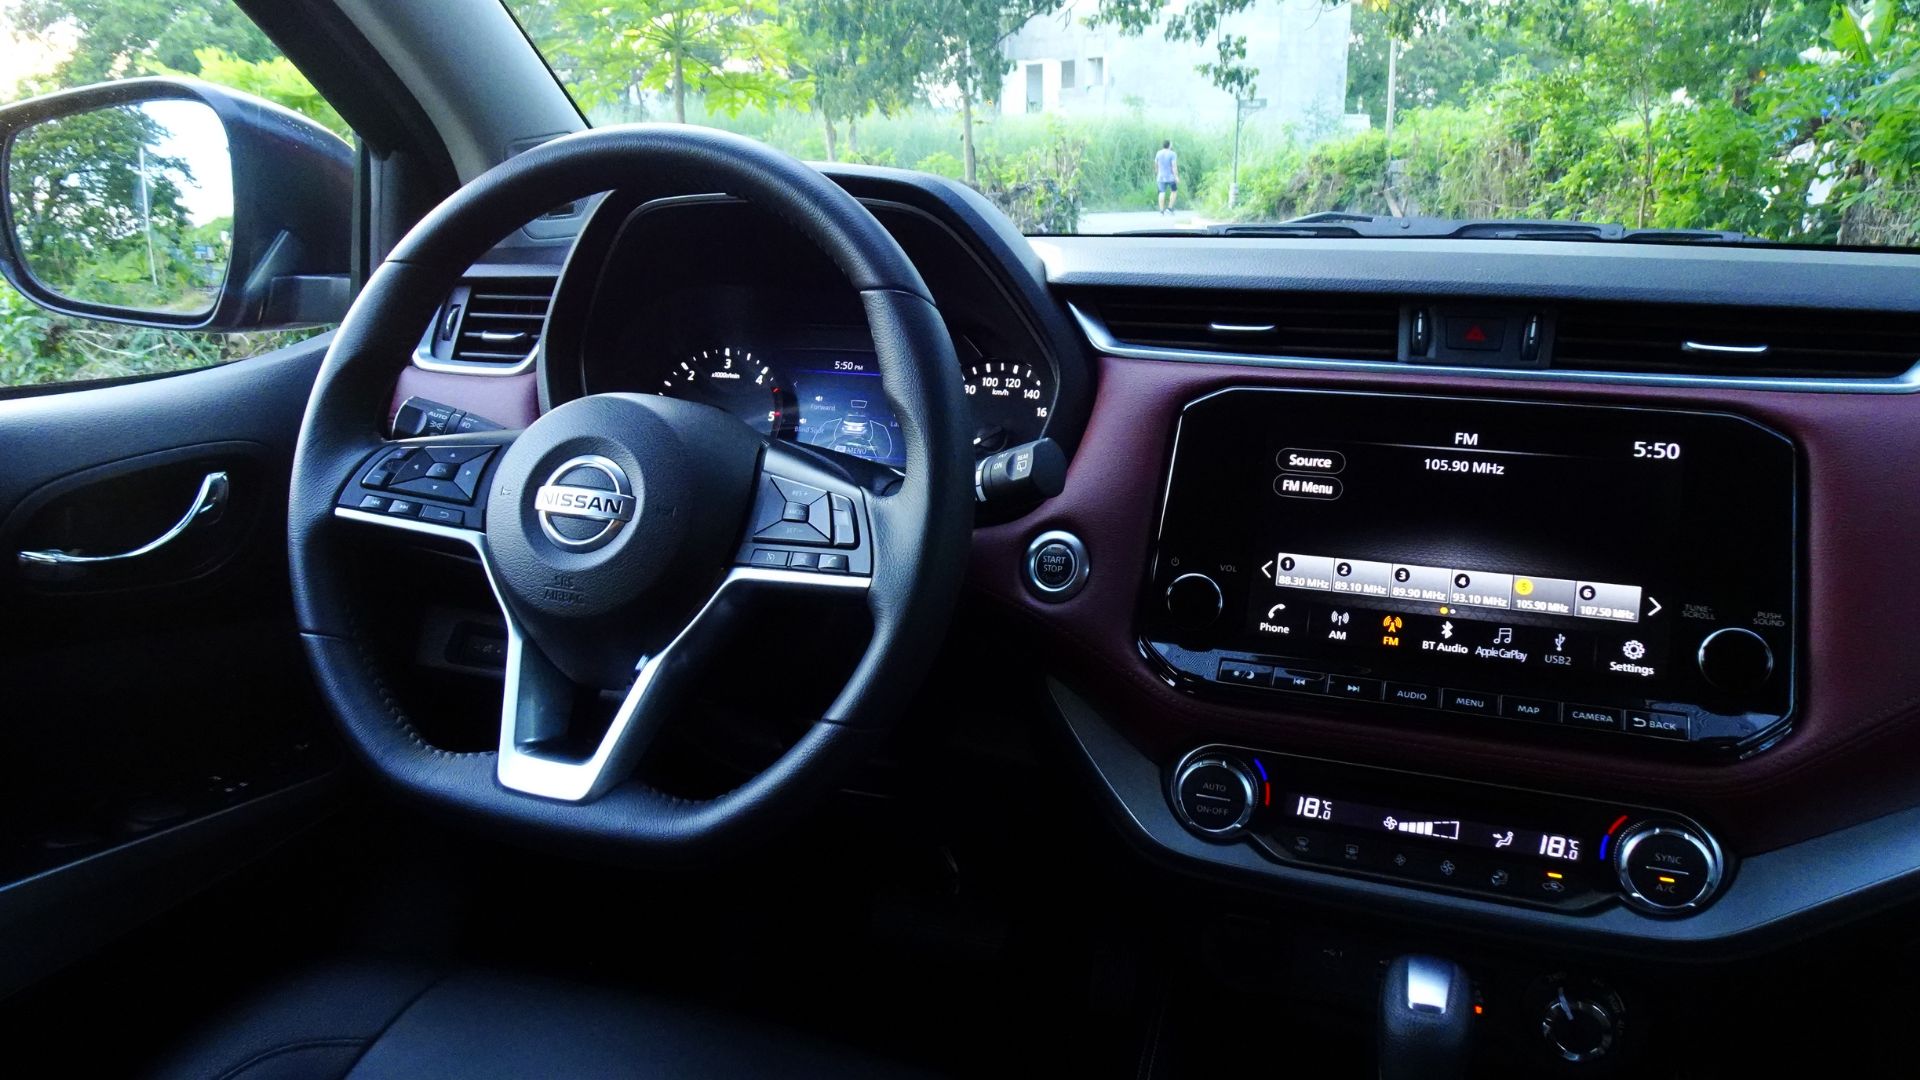 Nissan Terra VL 4x4 review interior